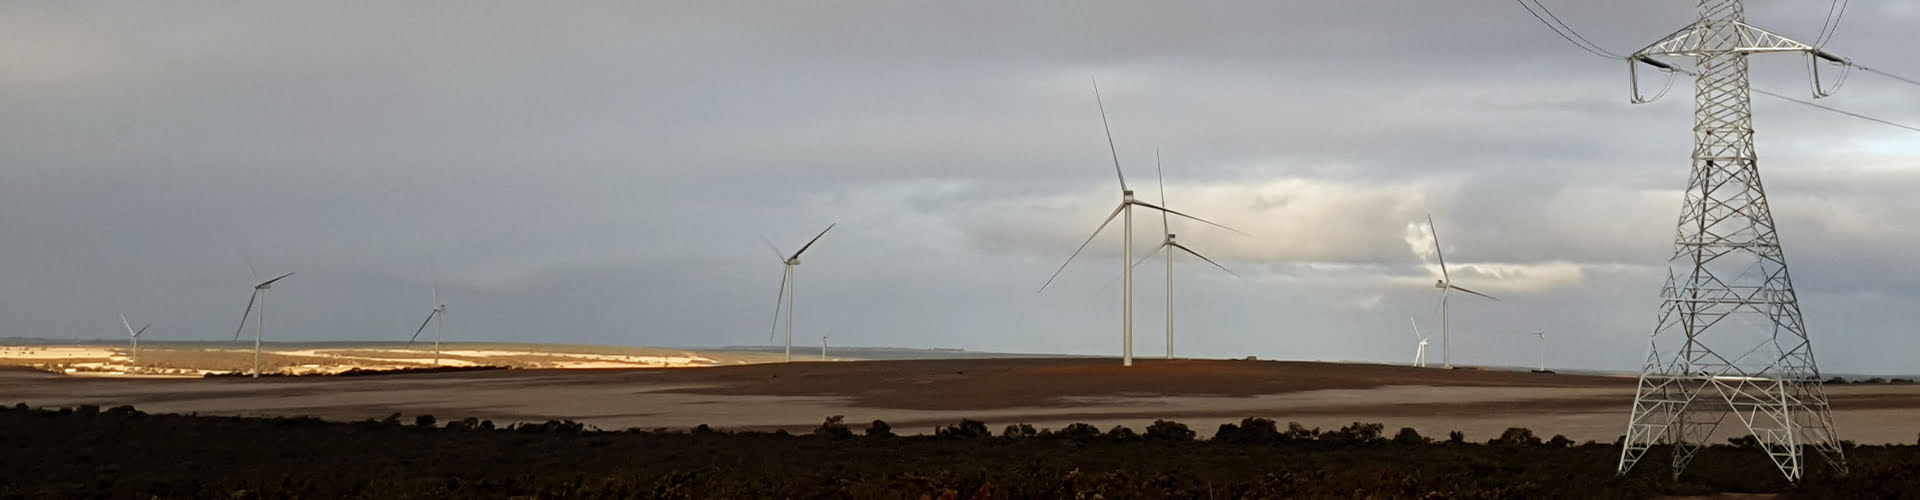 Warradarge 330 kV Wind Farm Line